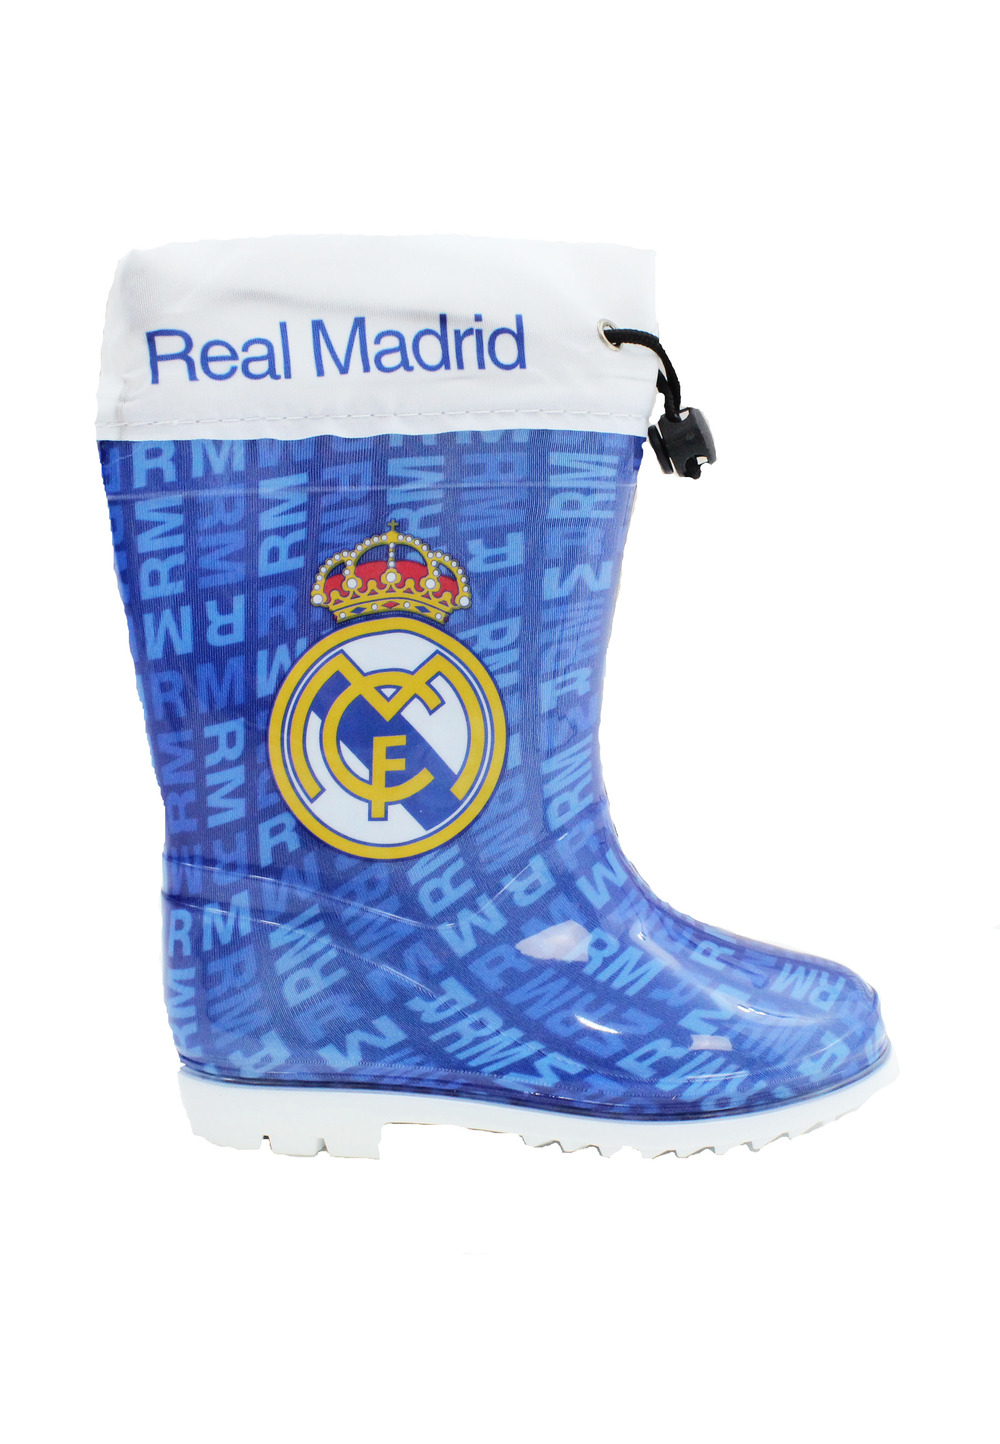 Cizme baieti, din PVC, Real Madrid, albastru